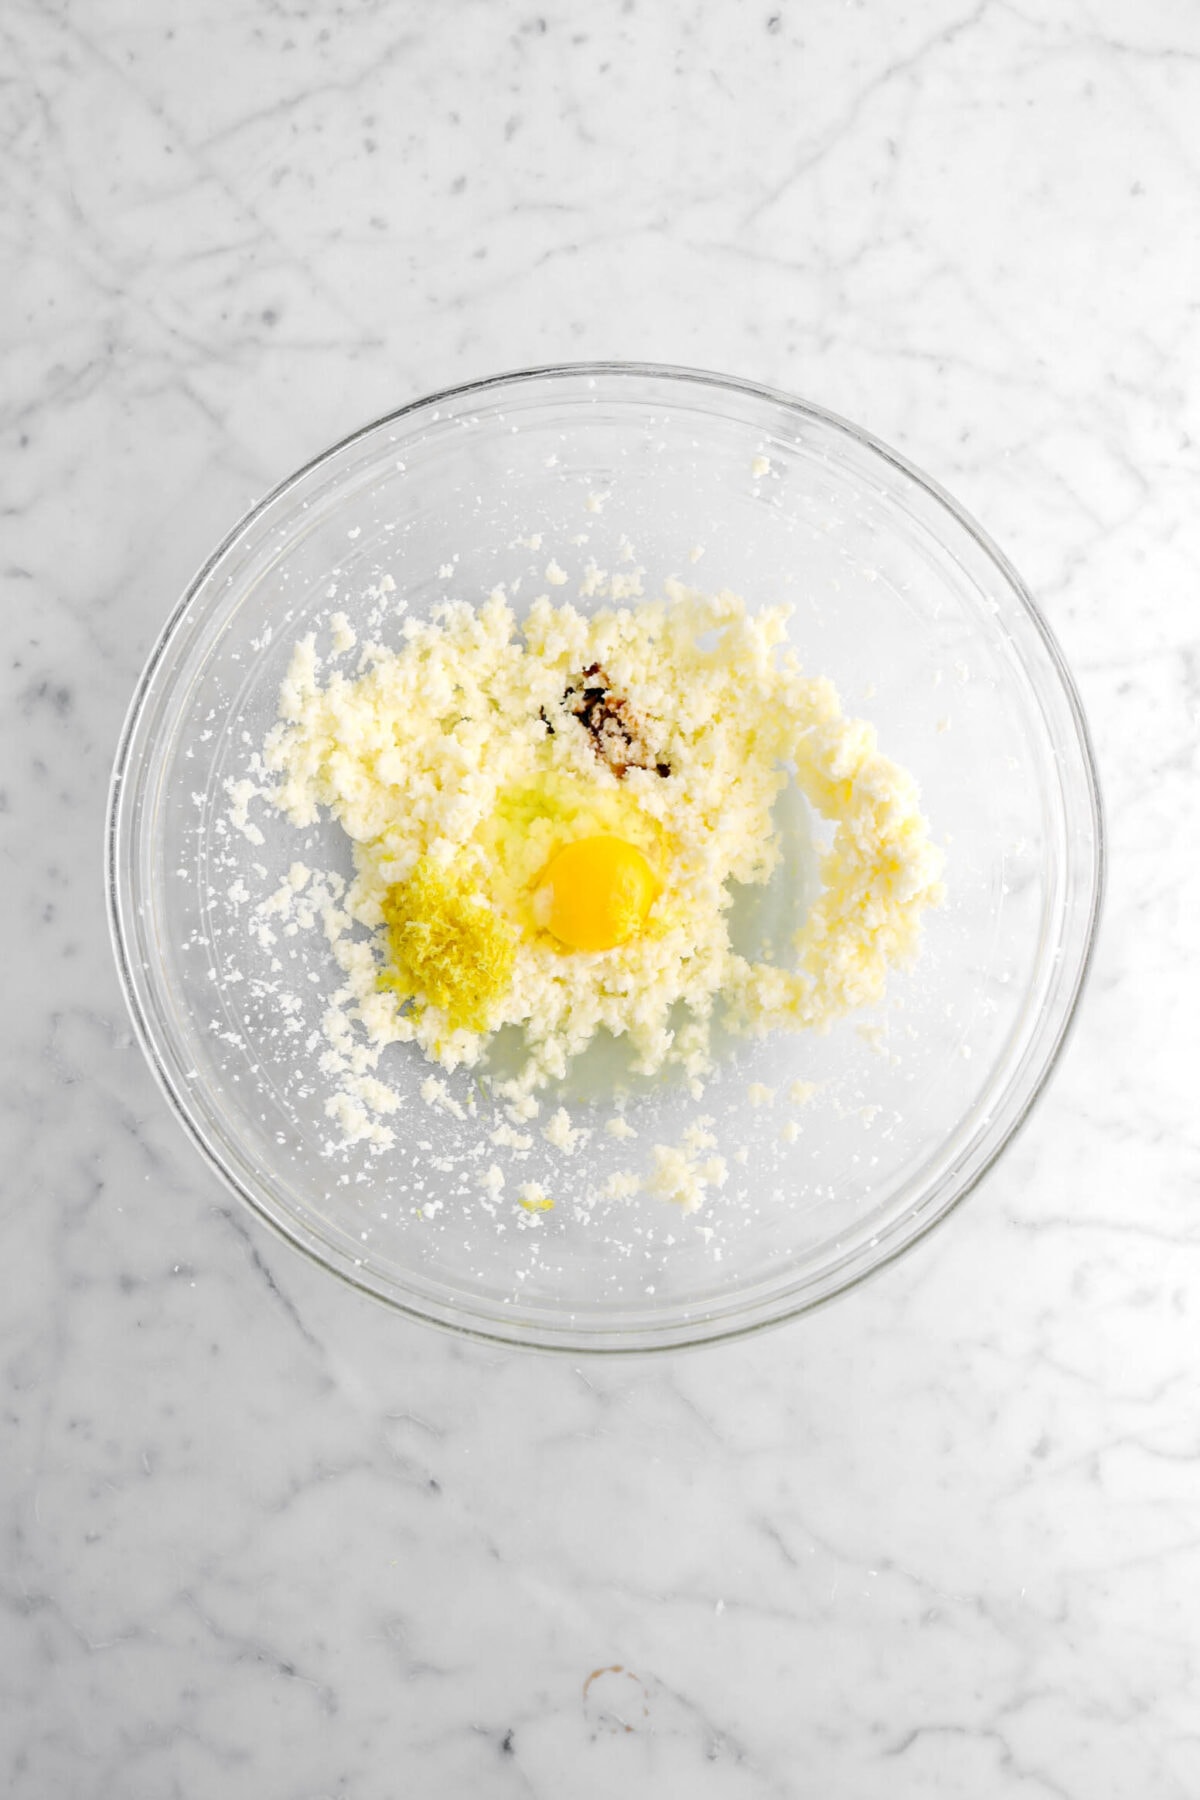 egg, lemon zest, and vanilla added to butter mixture.